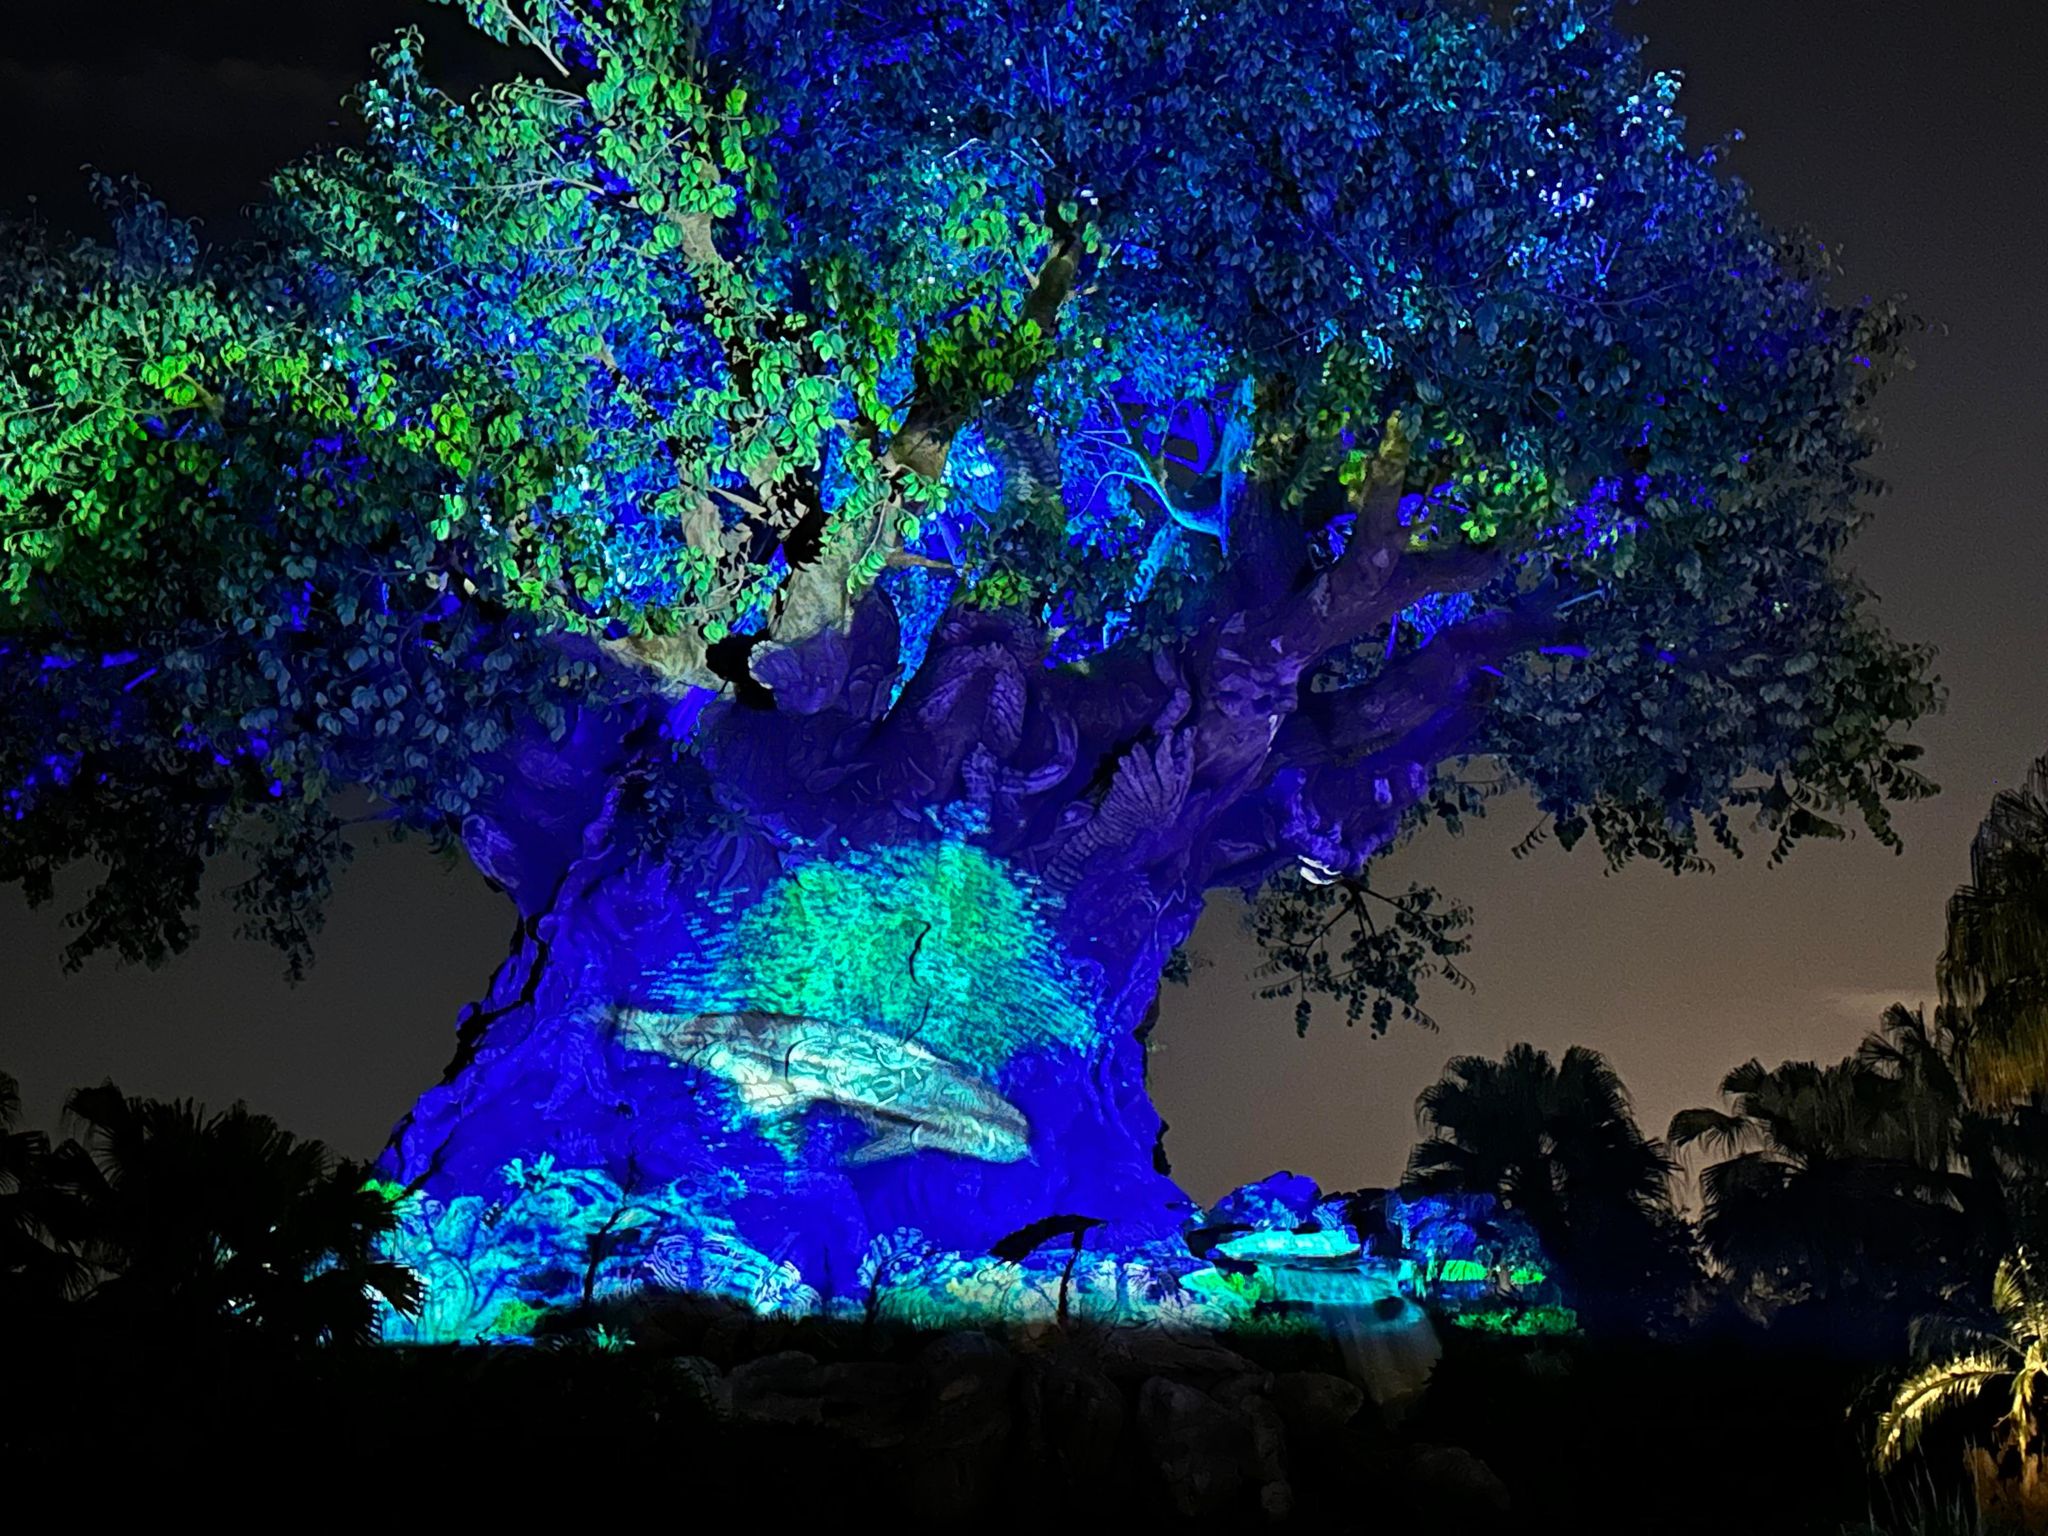 the tree of life movie creation